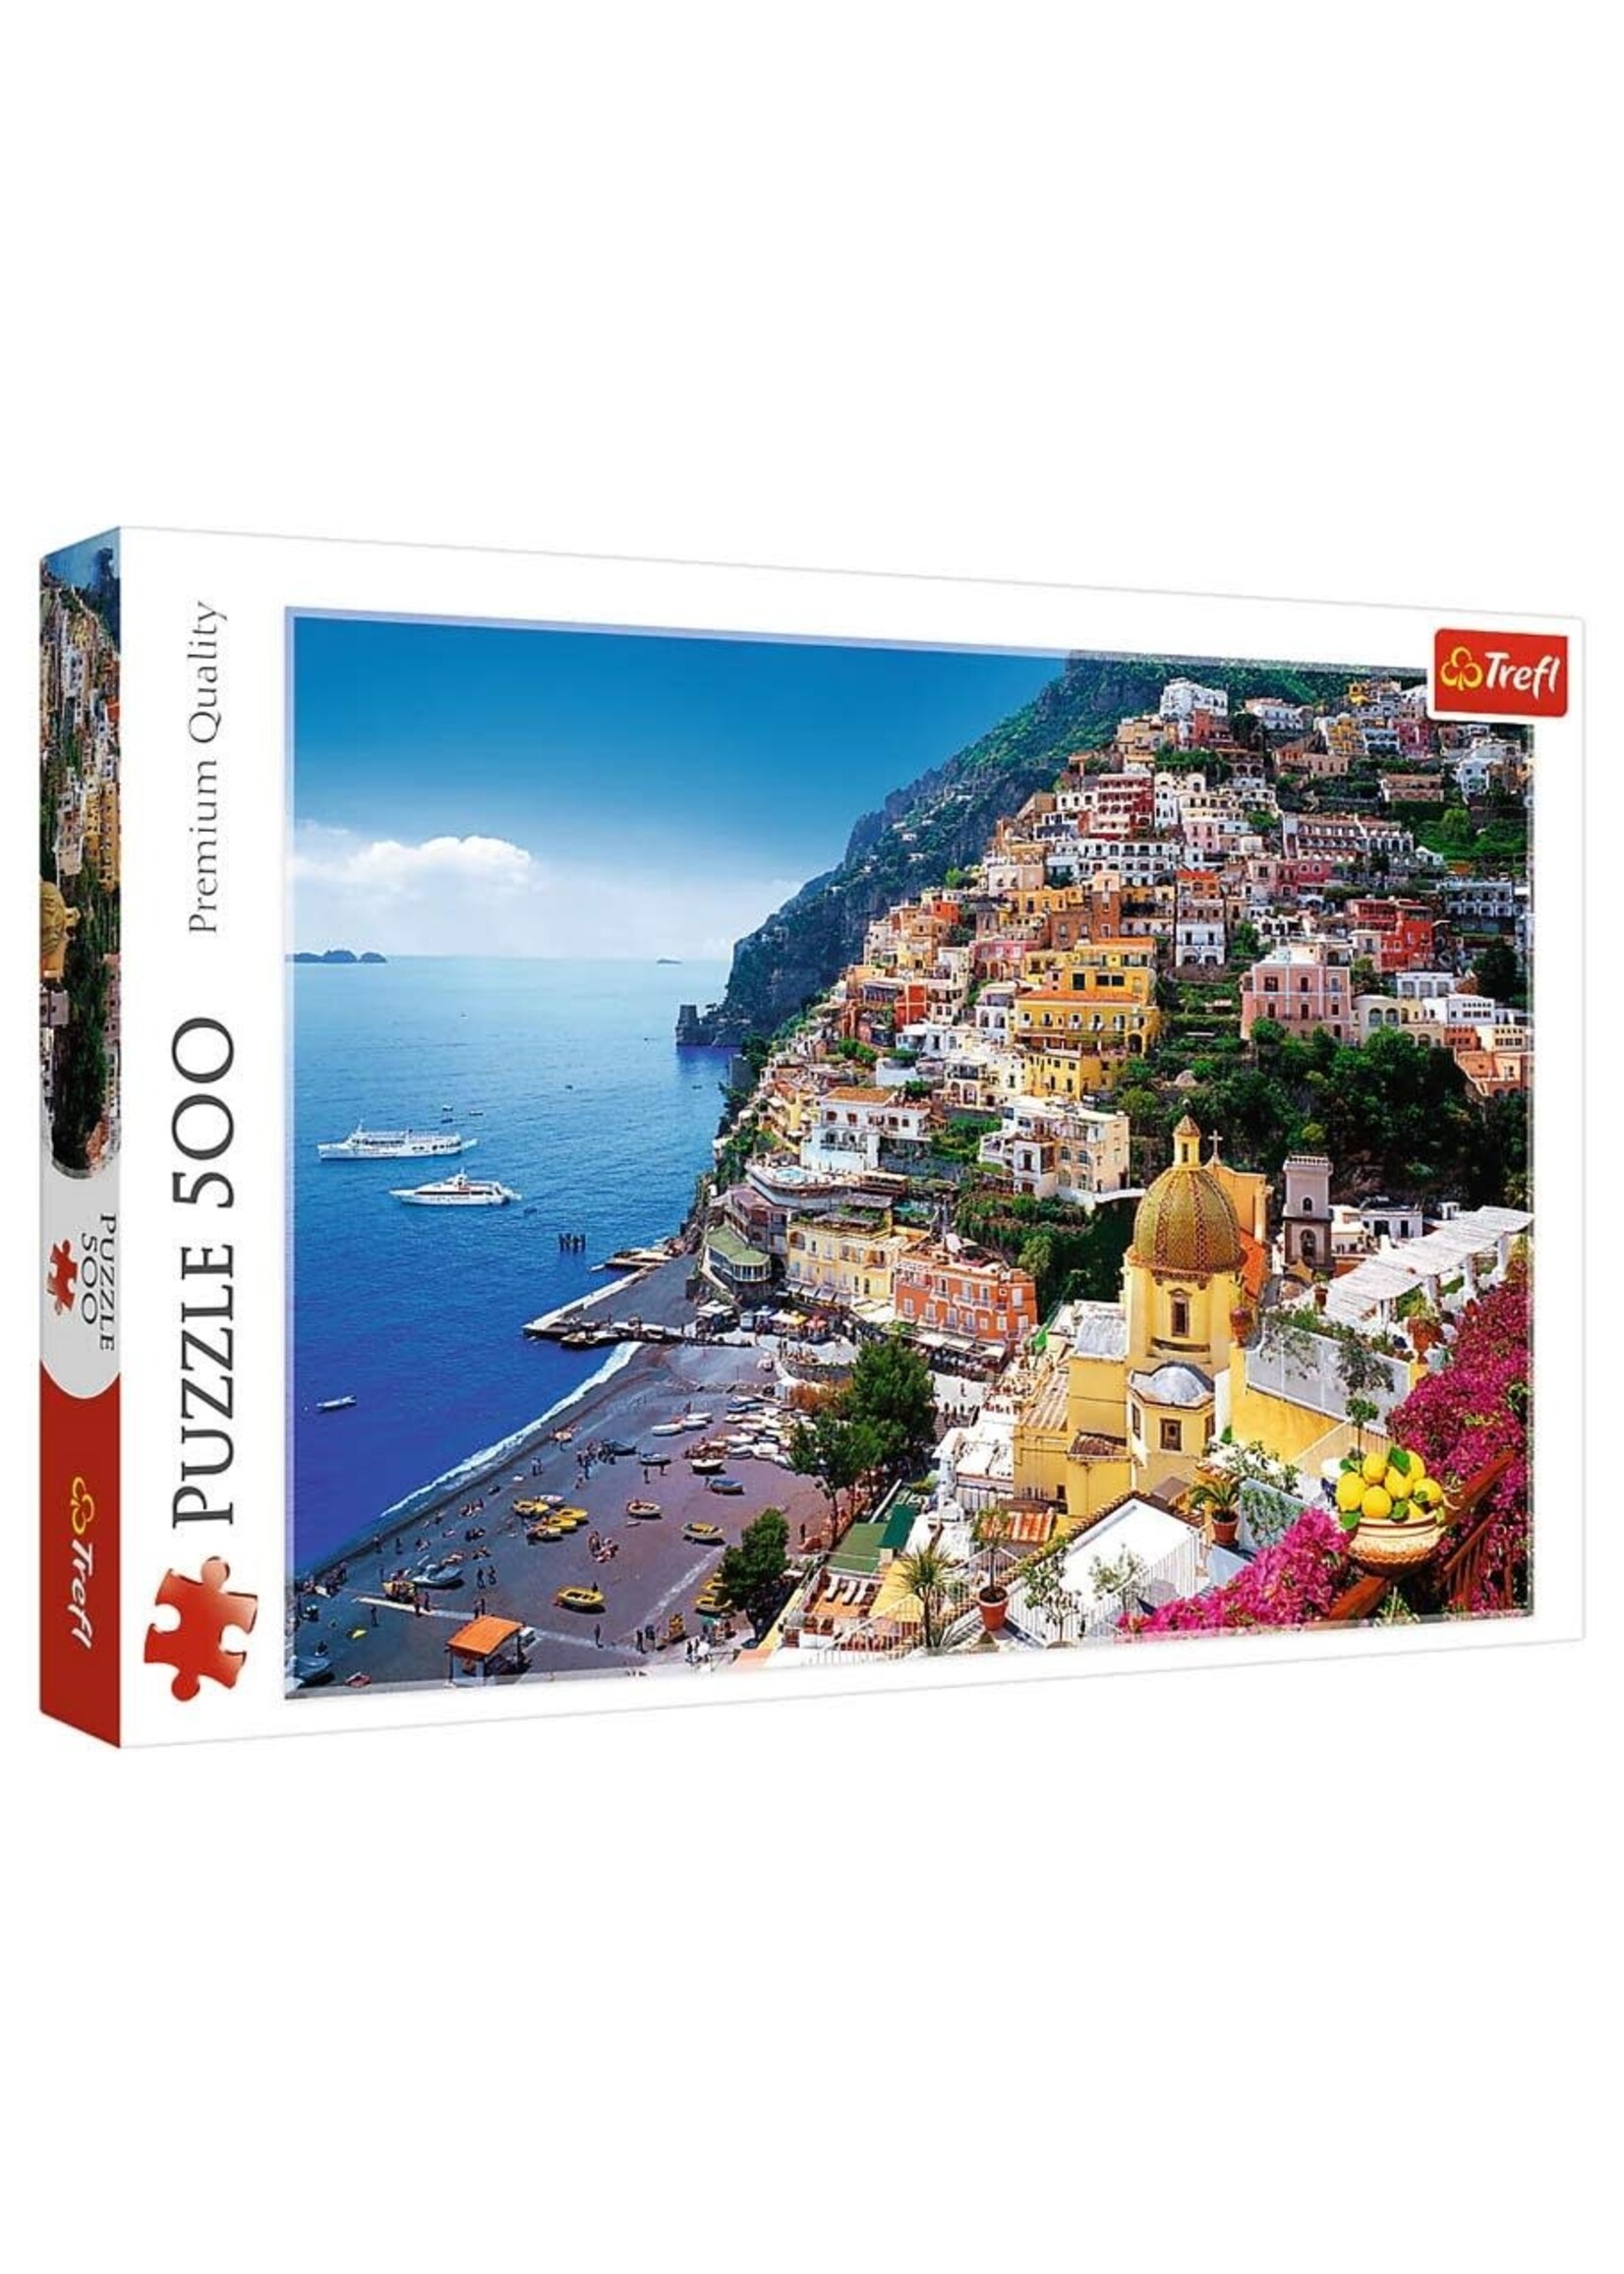 Trefl Puzzle: Positano, Italy/Fototeca 500pc